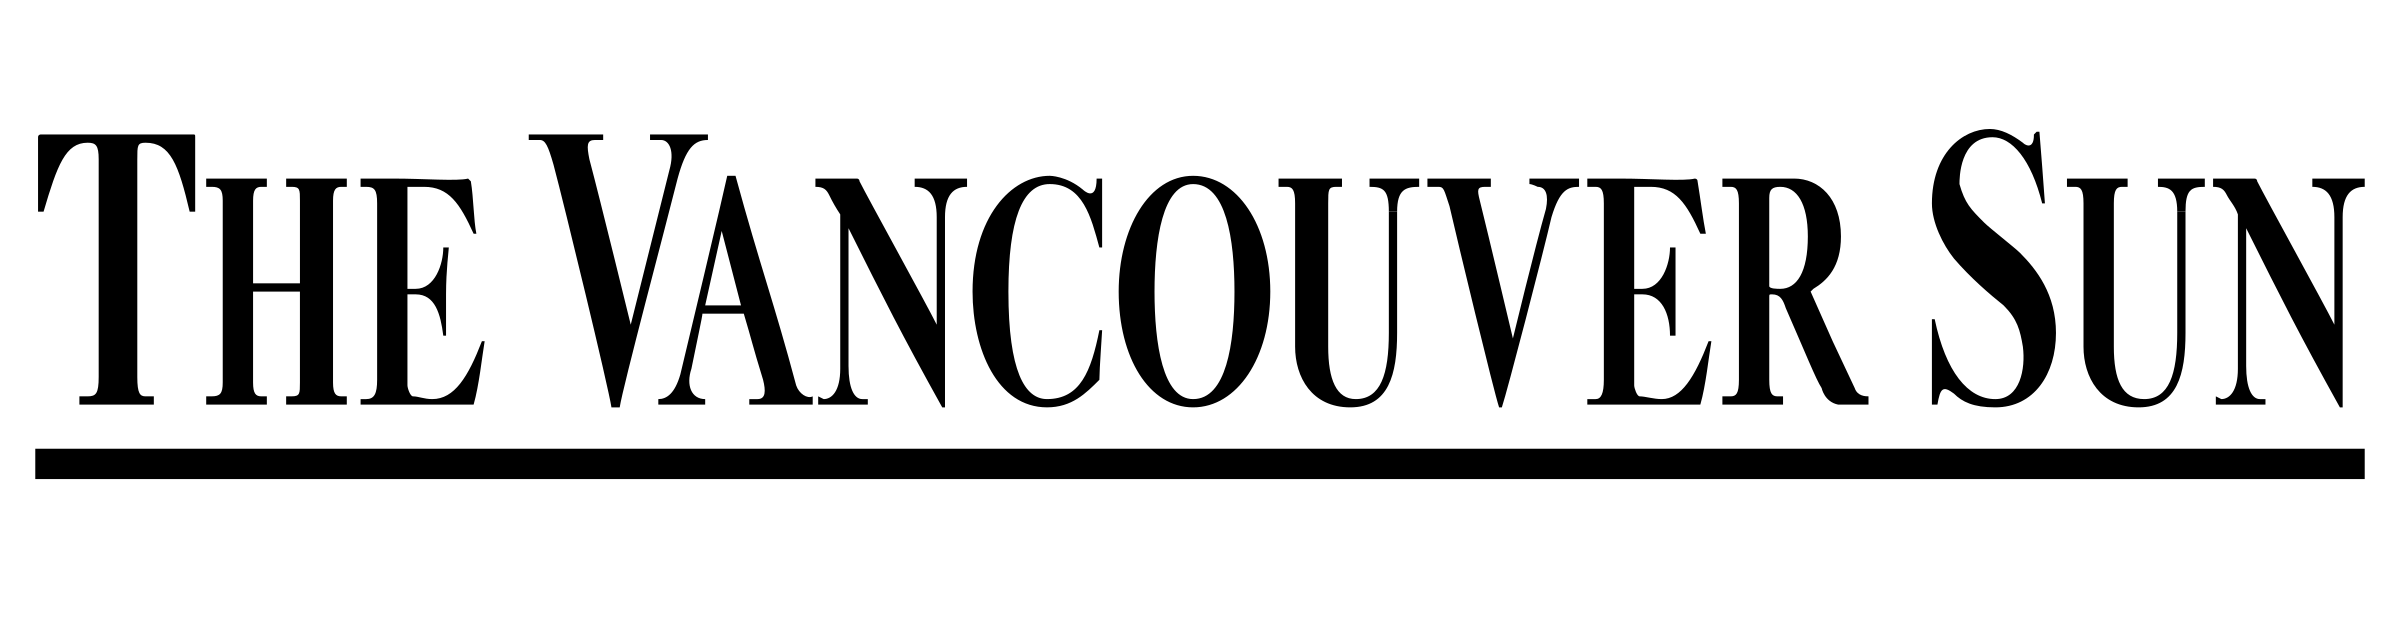 the-vancouver-sun-logo-png-transparent